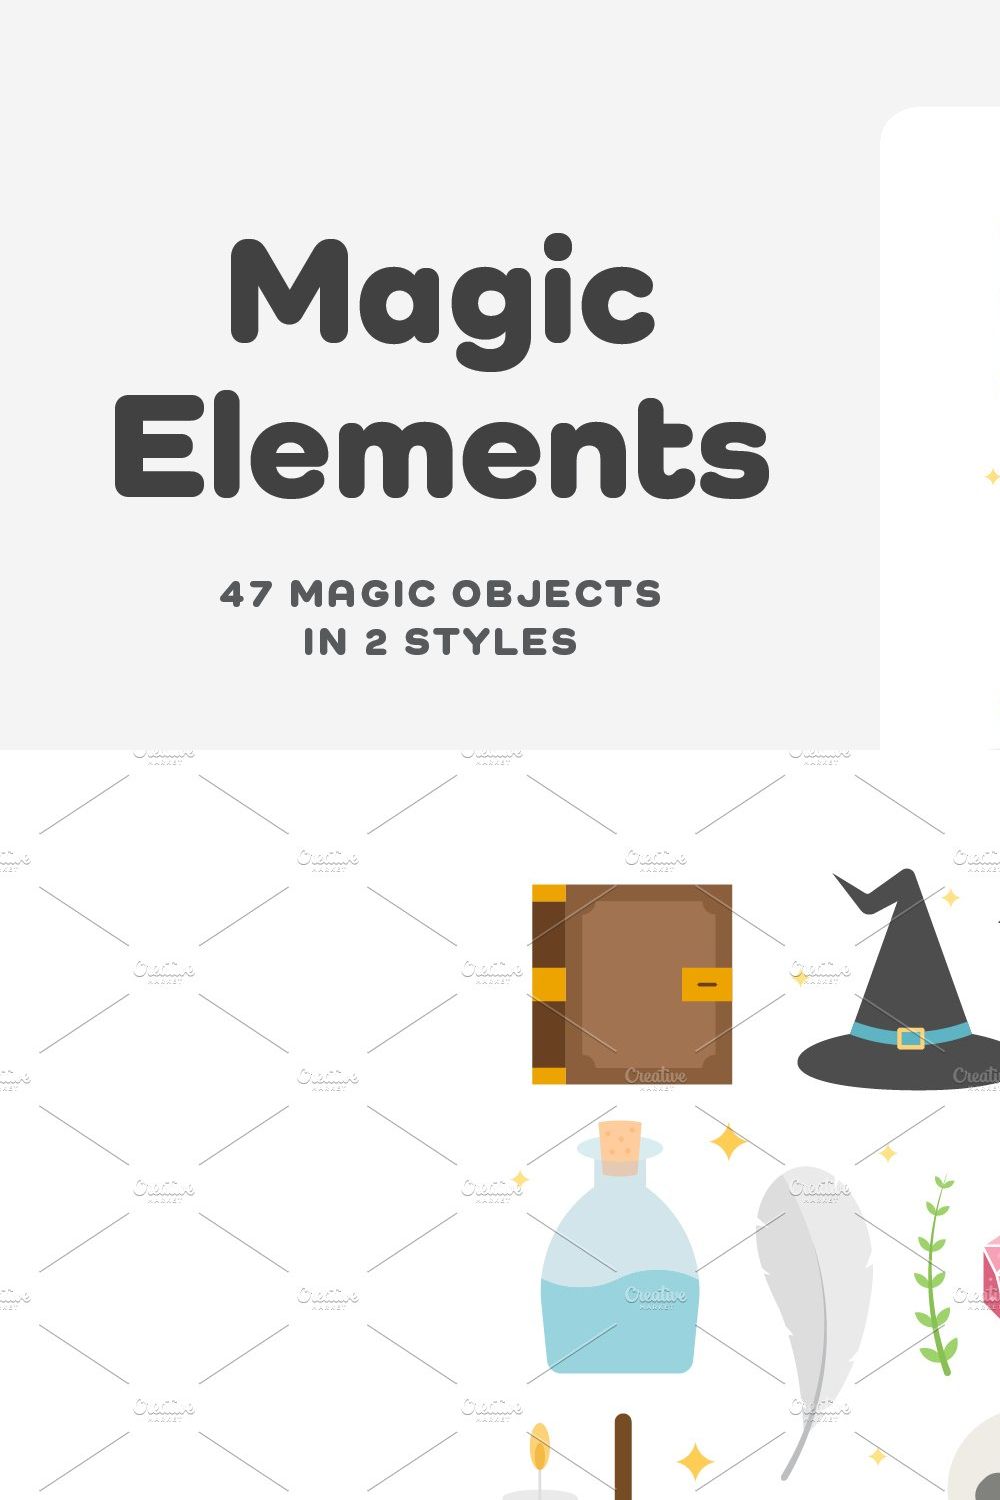 Magic Elements pinterest preview image.